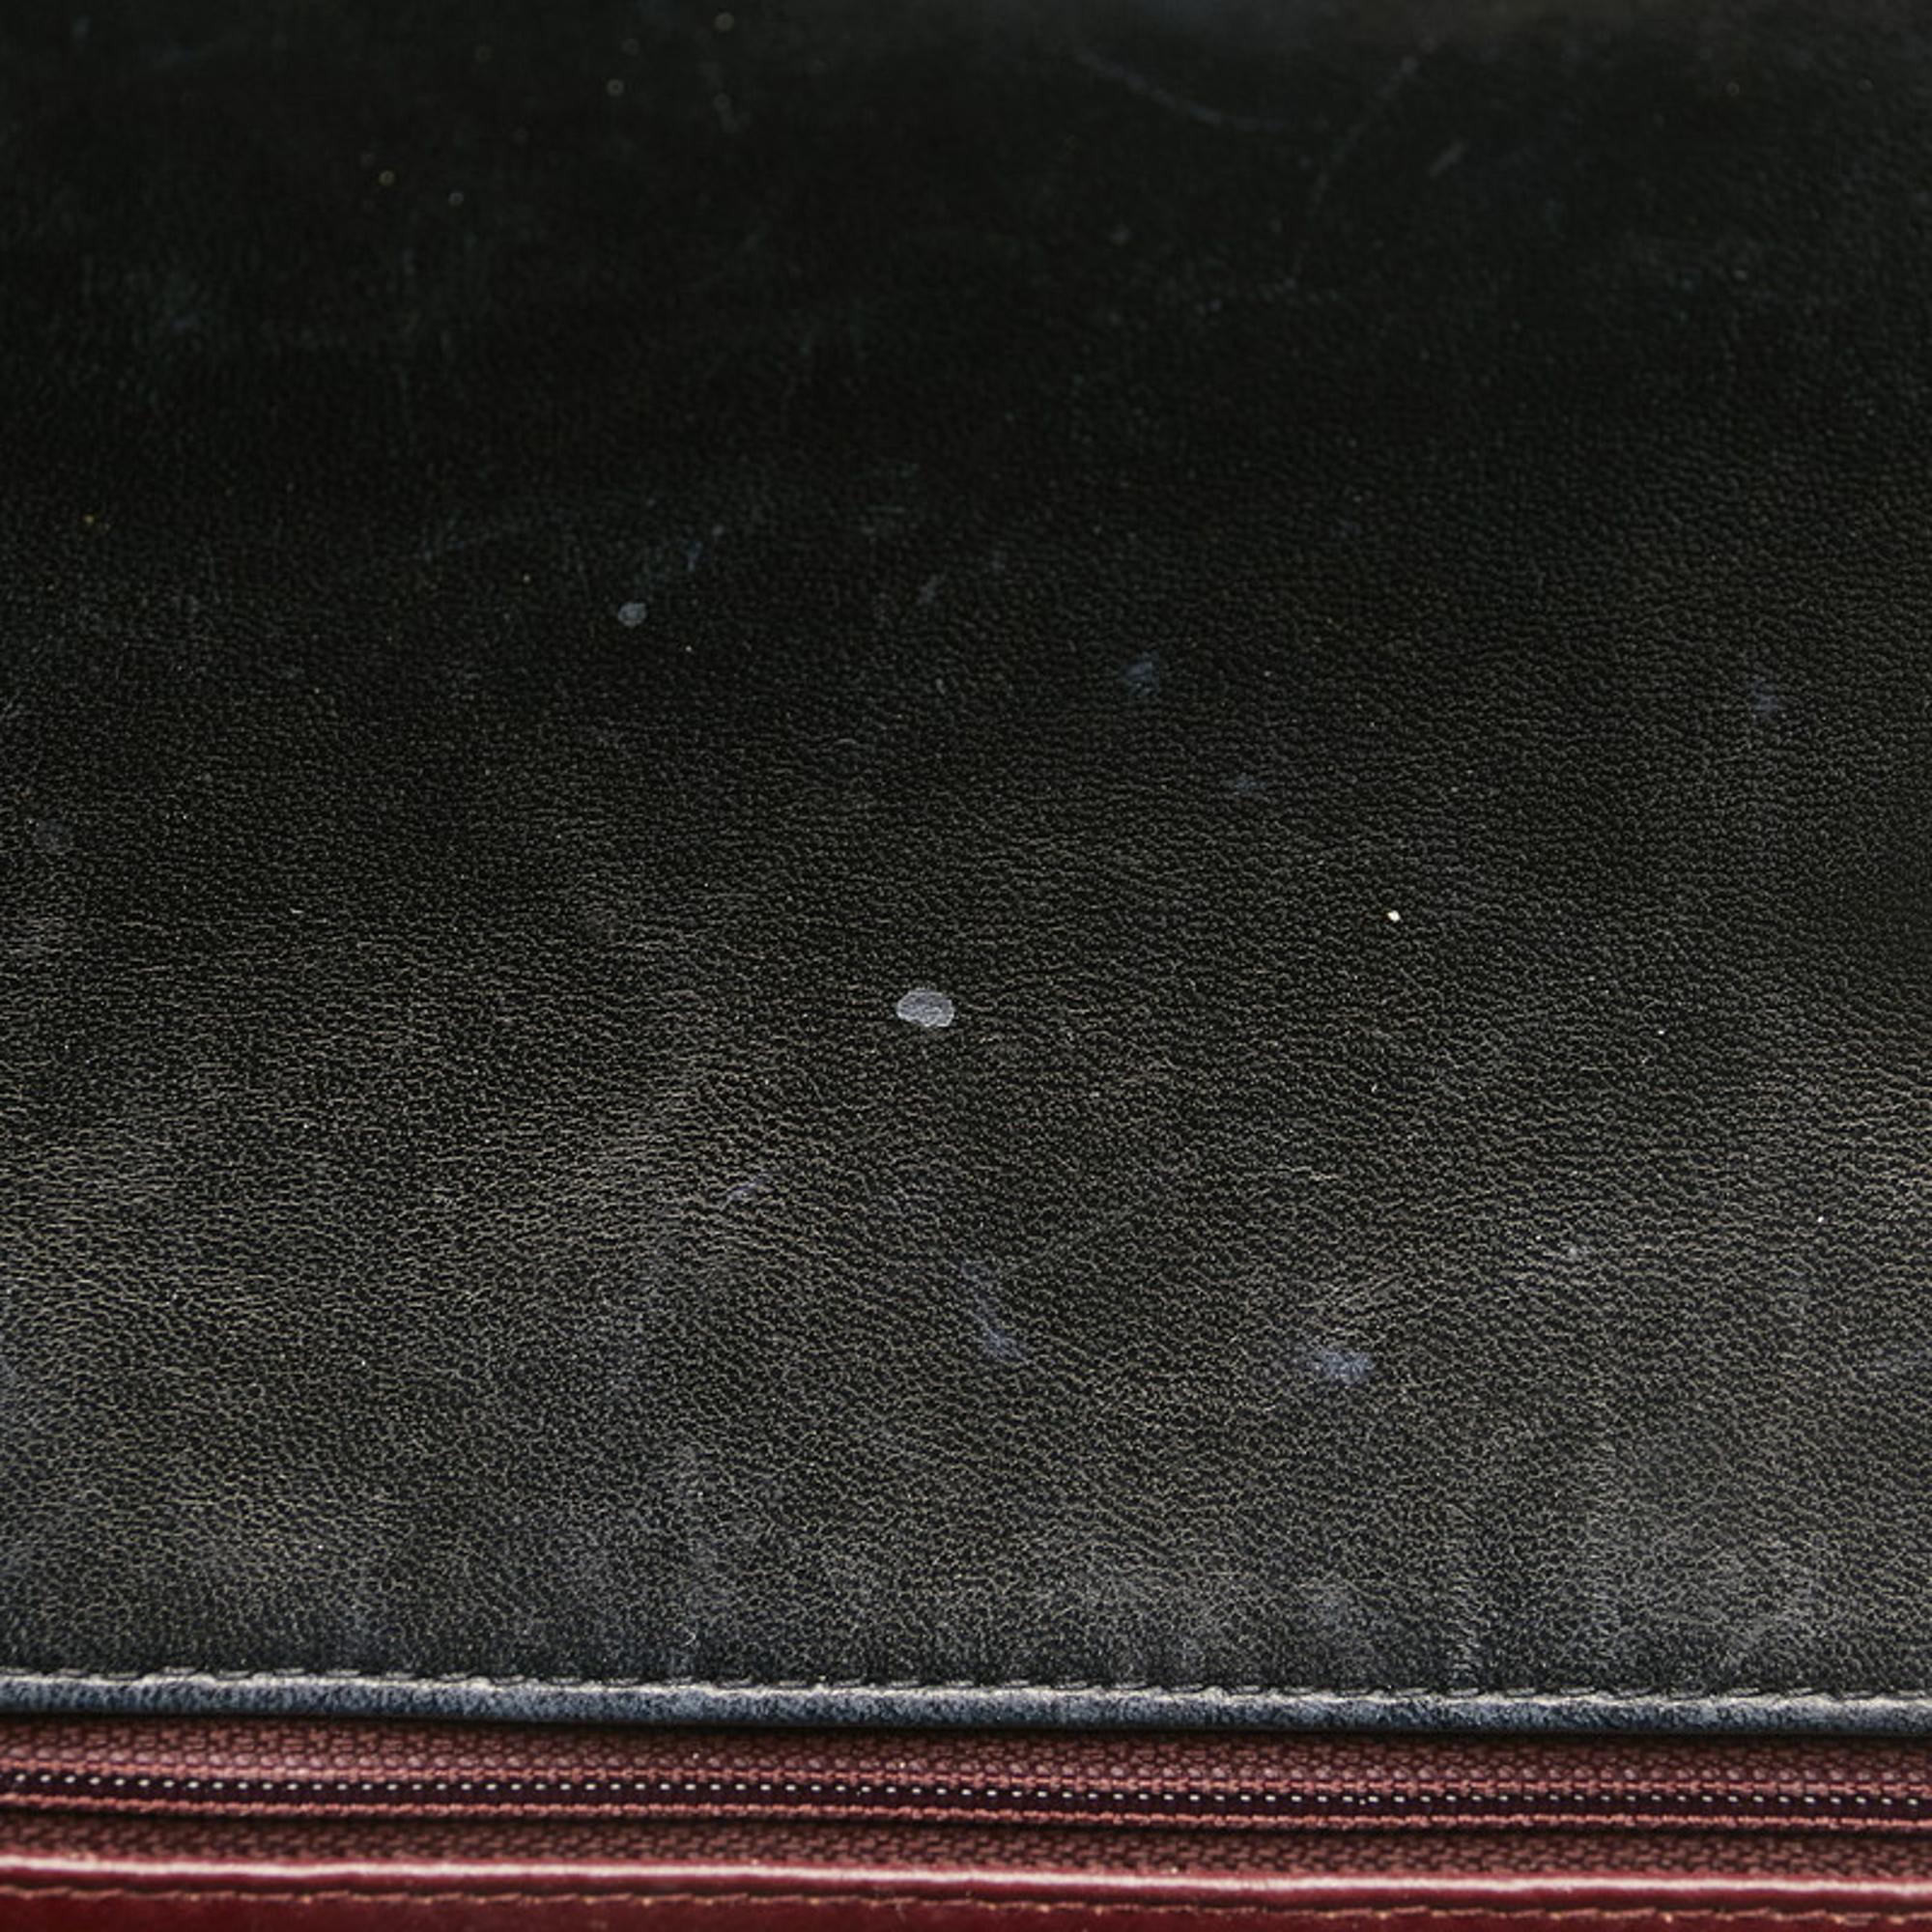 Chanel Black Leather Diana Flap Crossbody Bag